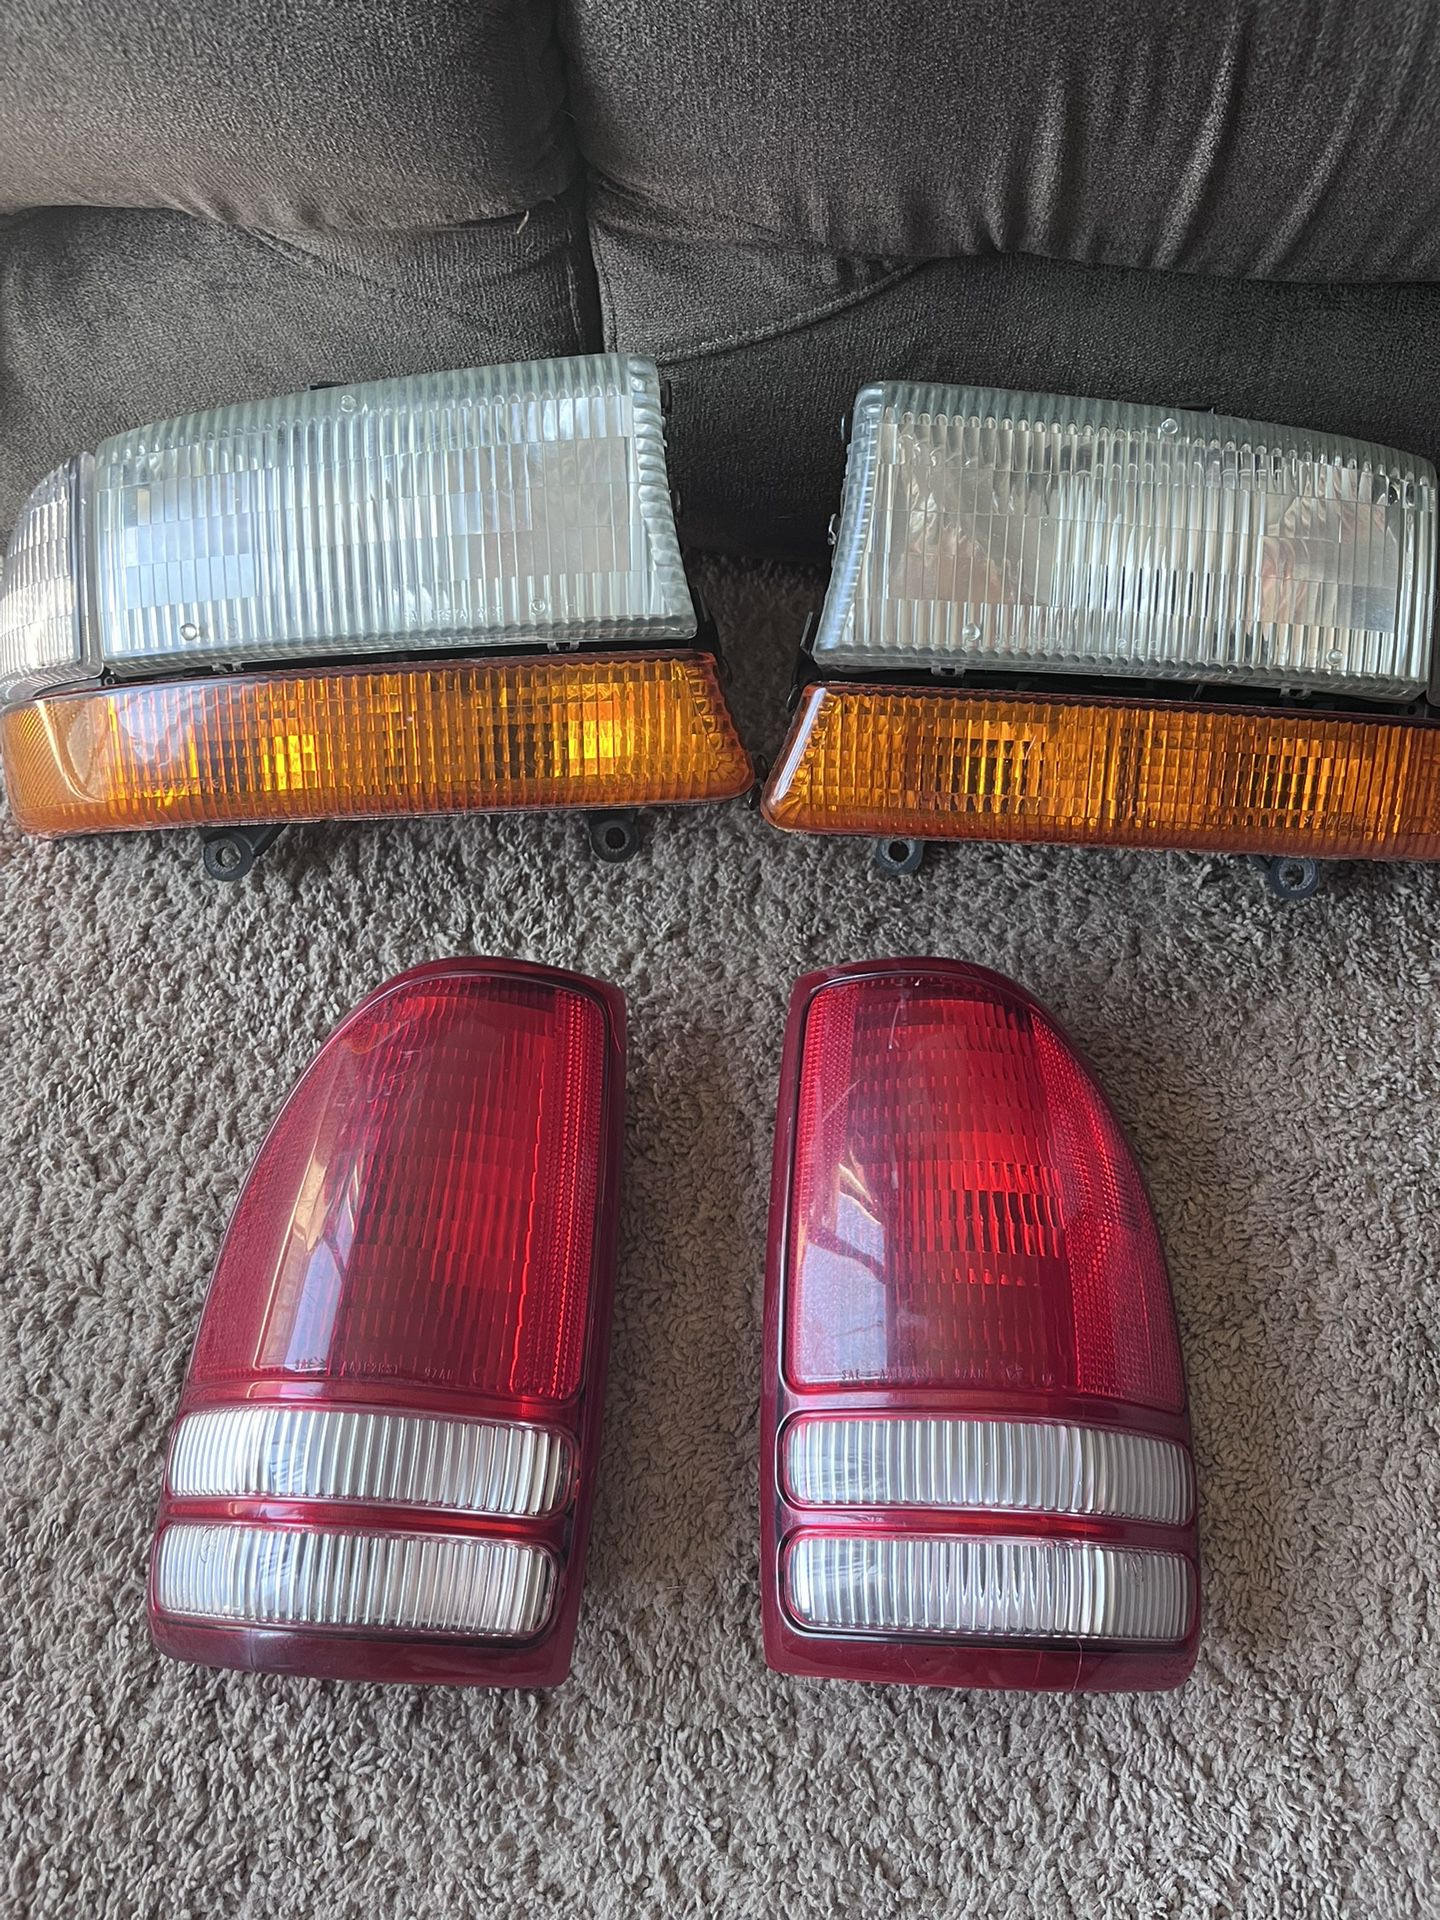 2002 Dodge Dakota Headlights And Tail Lights Factory